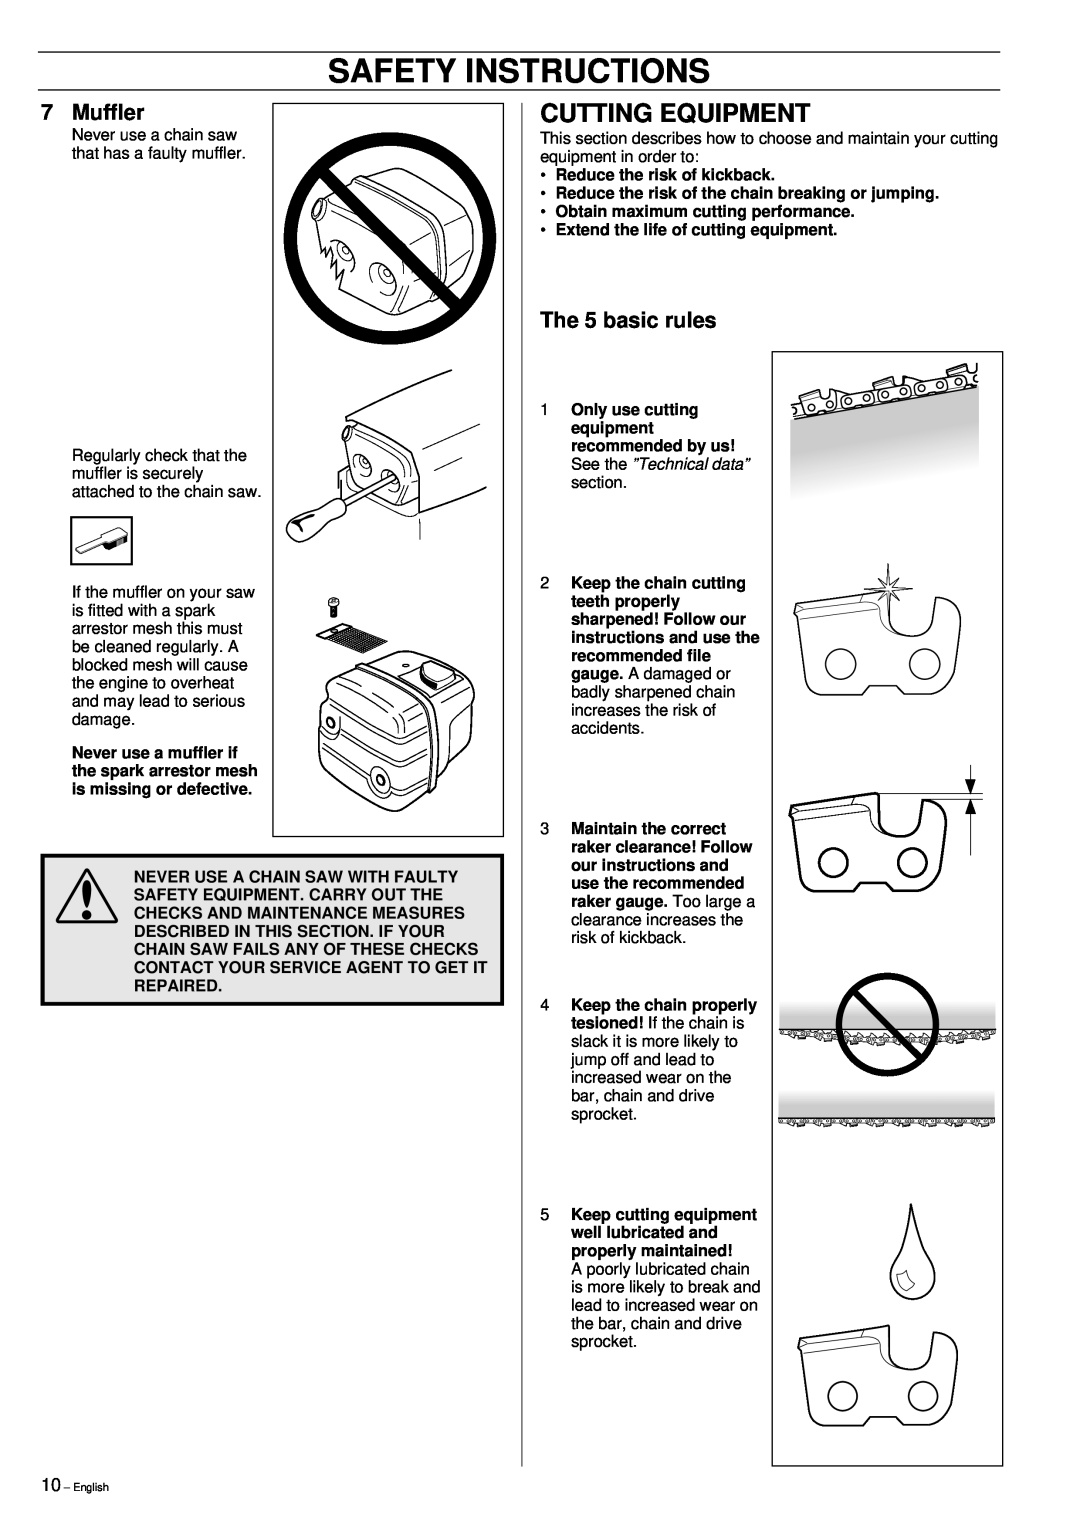 Husqvarna 355 manual Cutting Equipment, The 5 basic rules, Safety Instructions, Muffler 